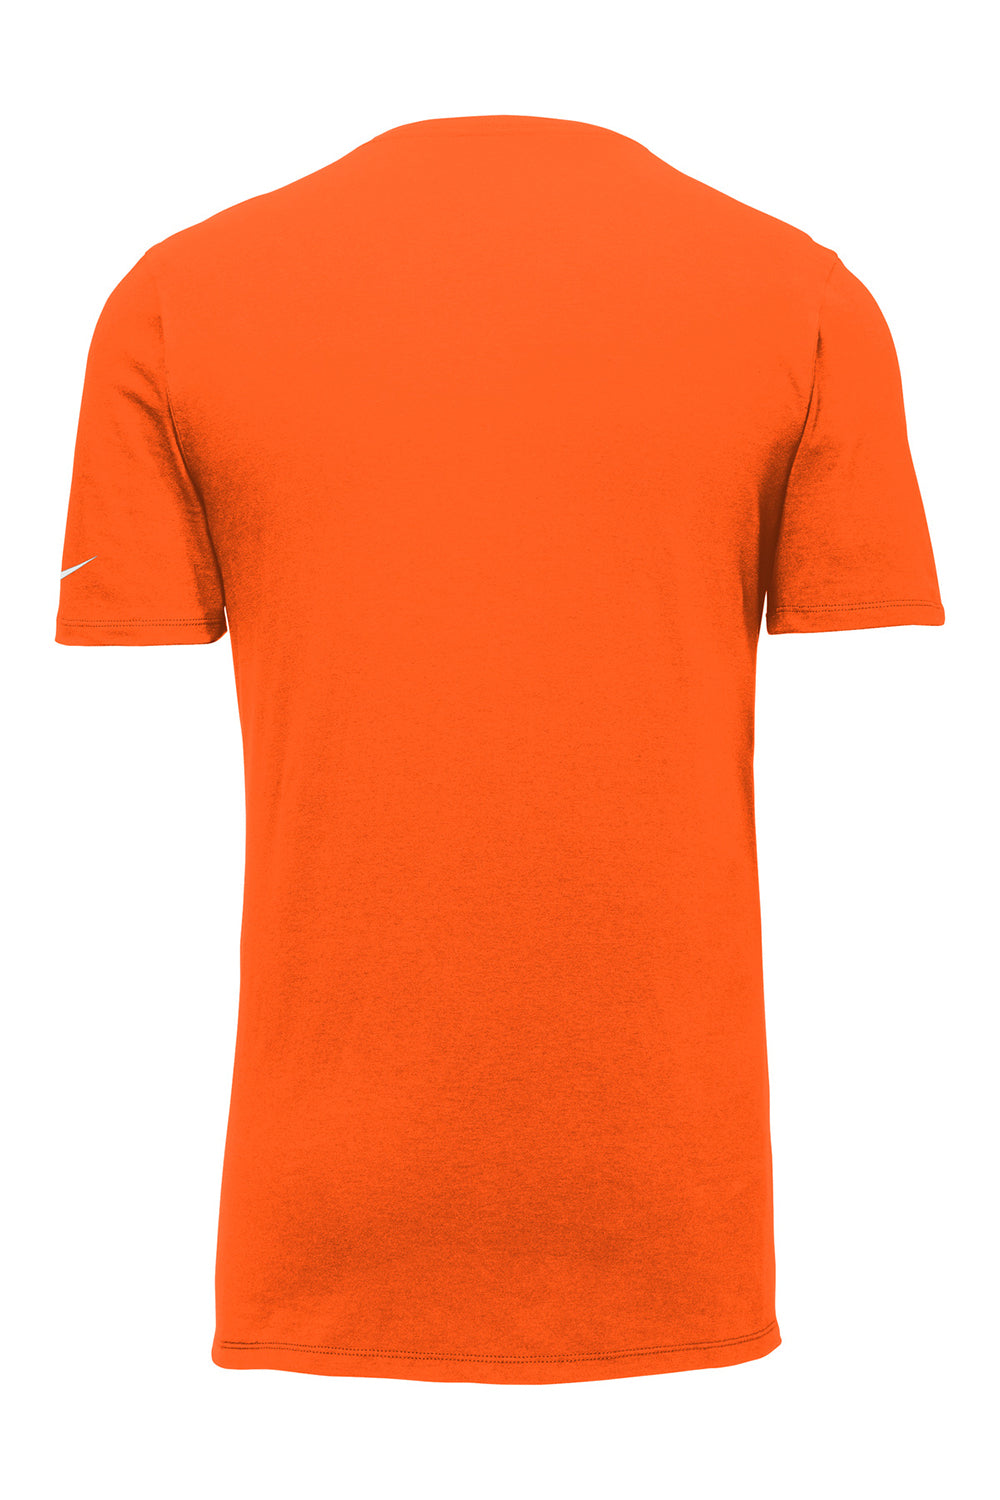 Nike NKBQ5231 Mens Dri-Fit Moisture Wicking Short Sleeve Crewneck T-Shirt Brilliant Orange Flat Back